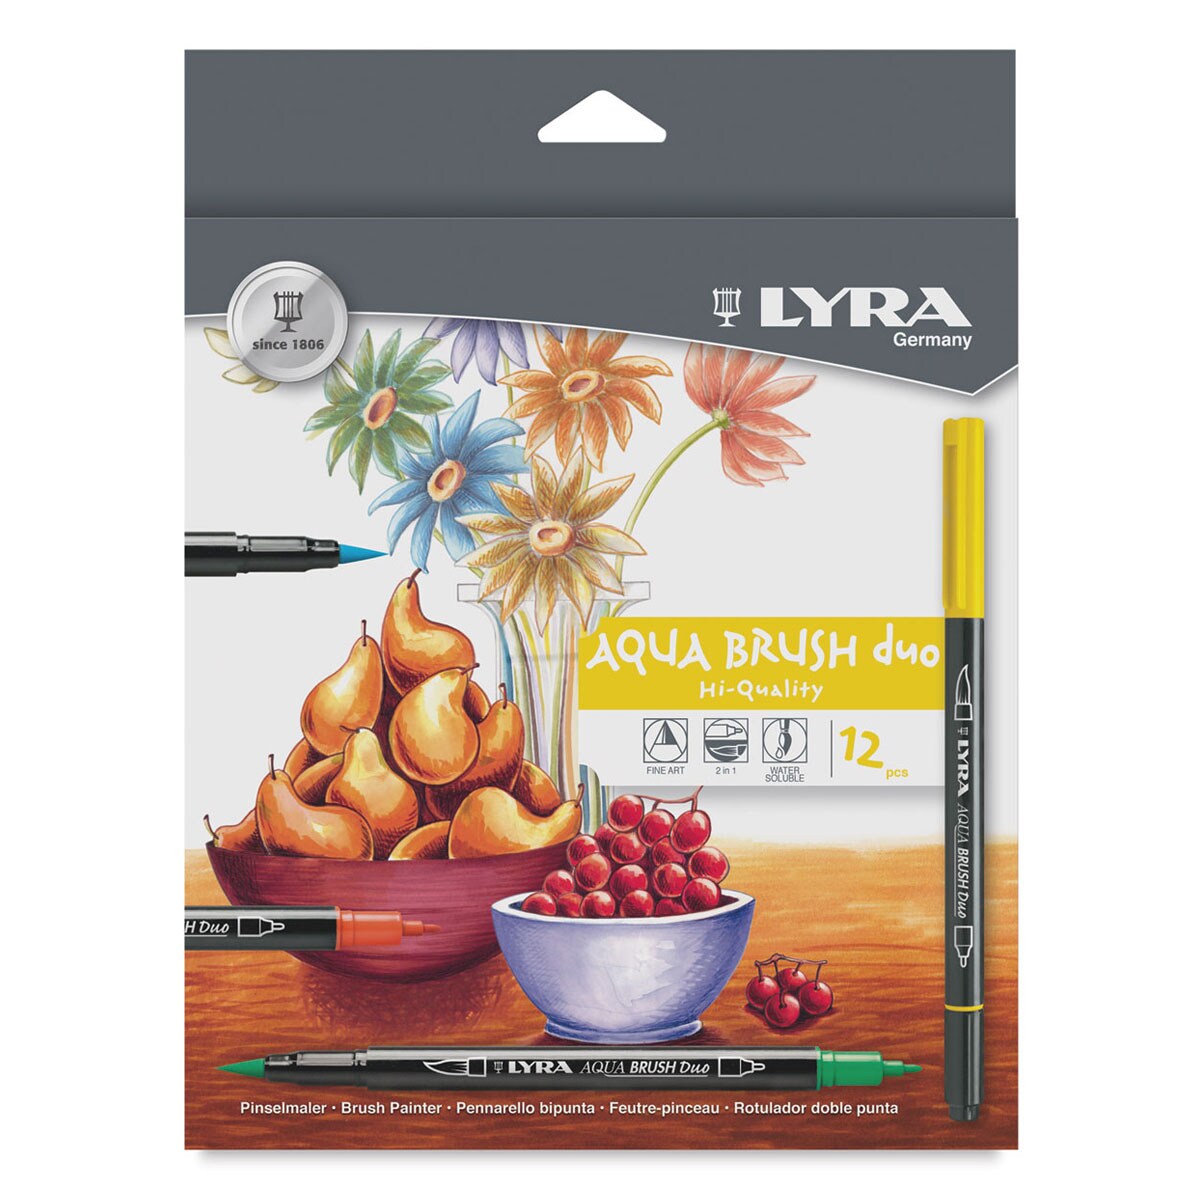 Lyra Aqua Brush Duo Markers - Assorted Colors, Set of 12